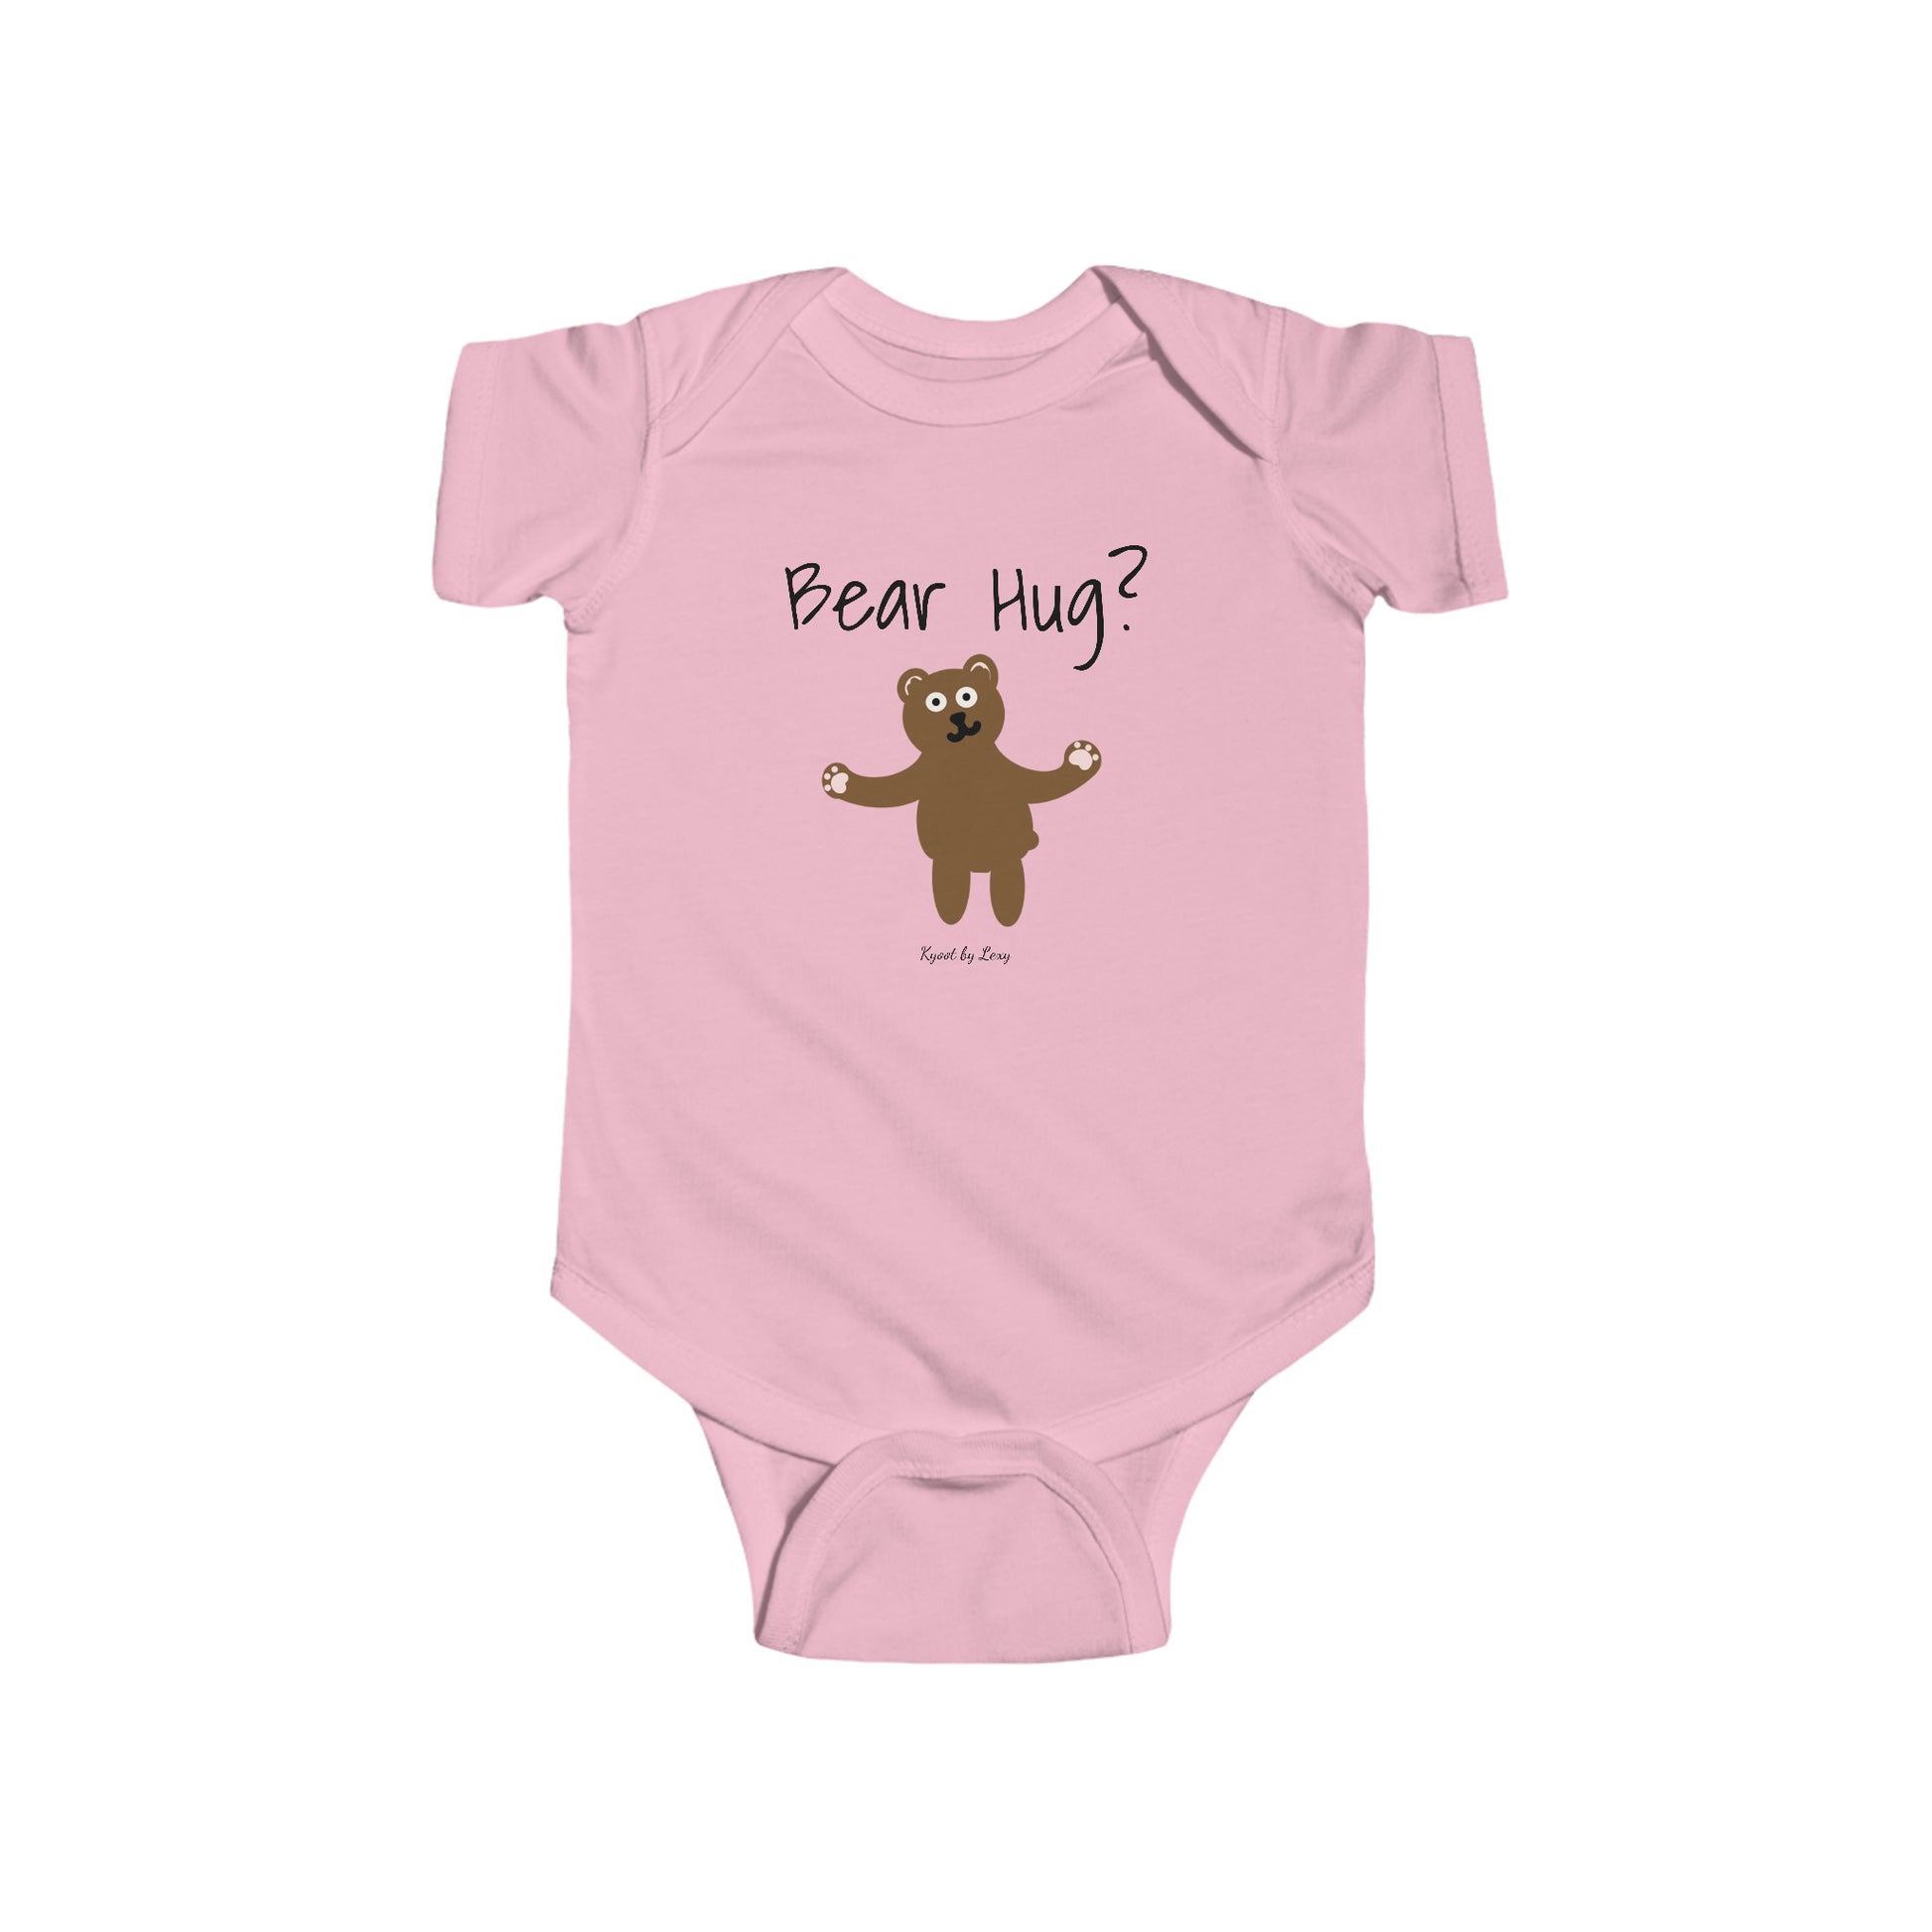 Bear Hug? Infant Fine Jersey Bodysuit – Kyoot by Lexy